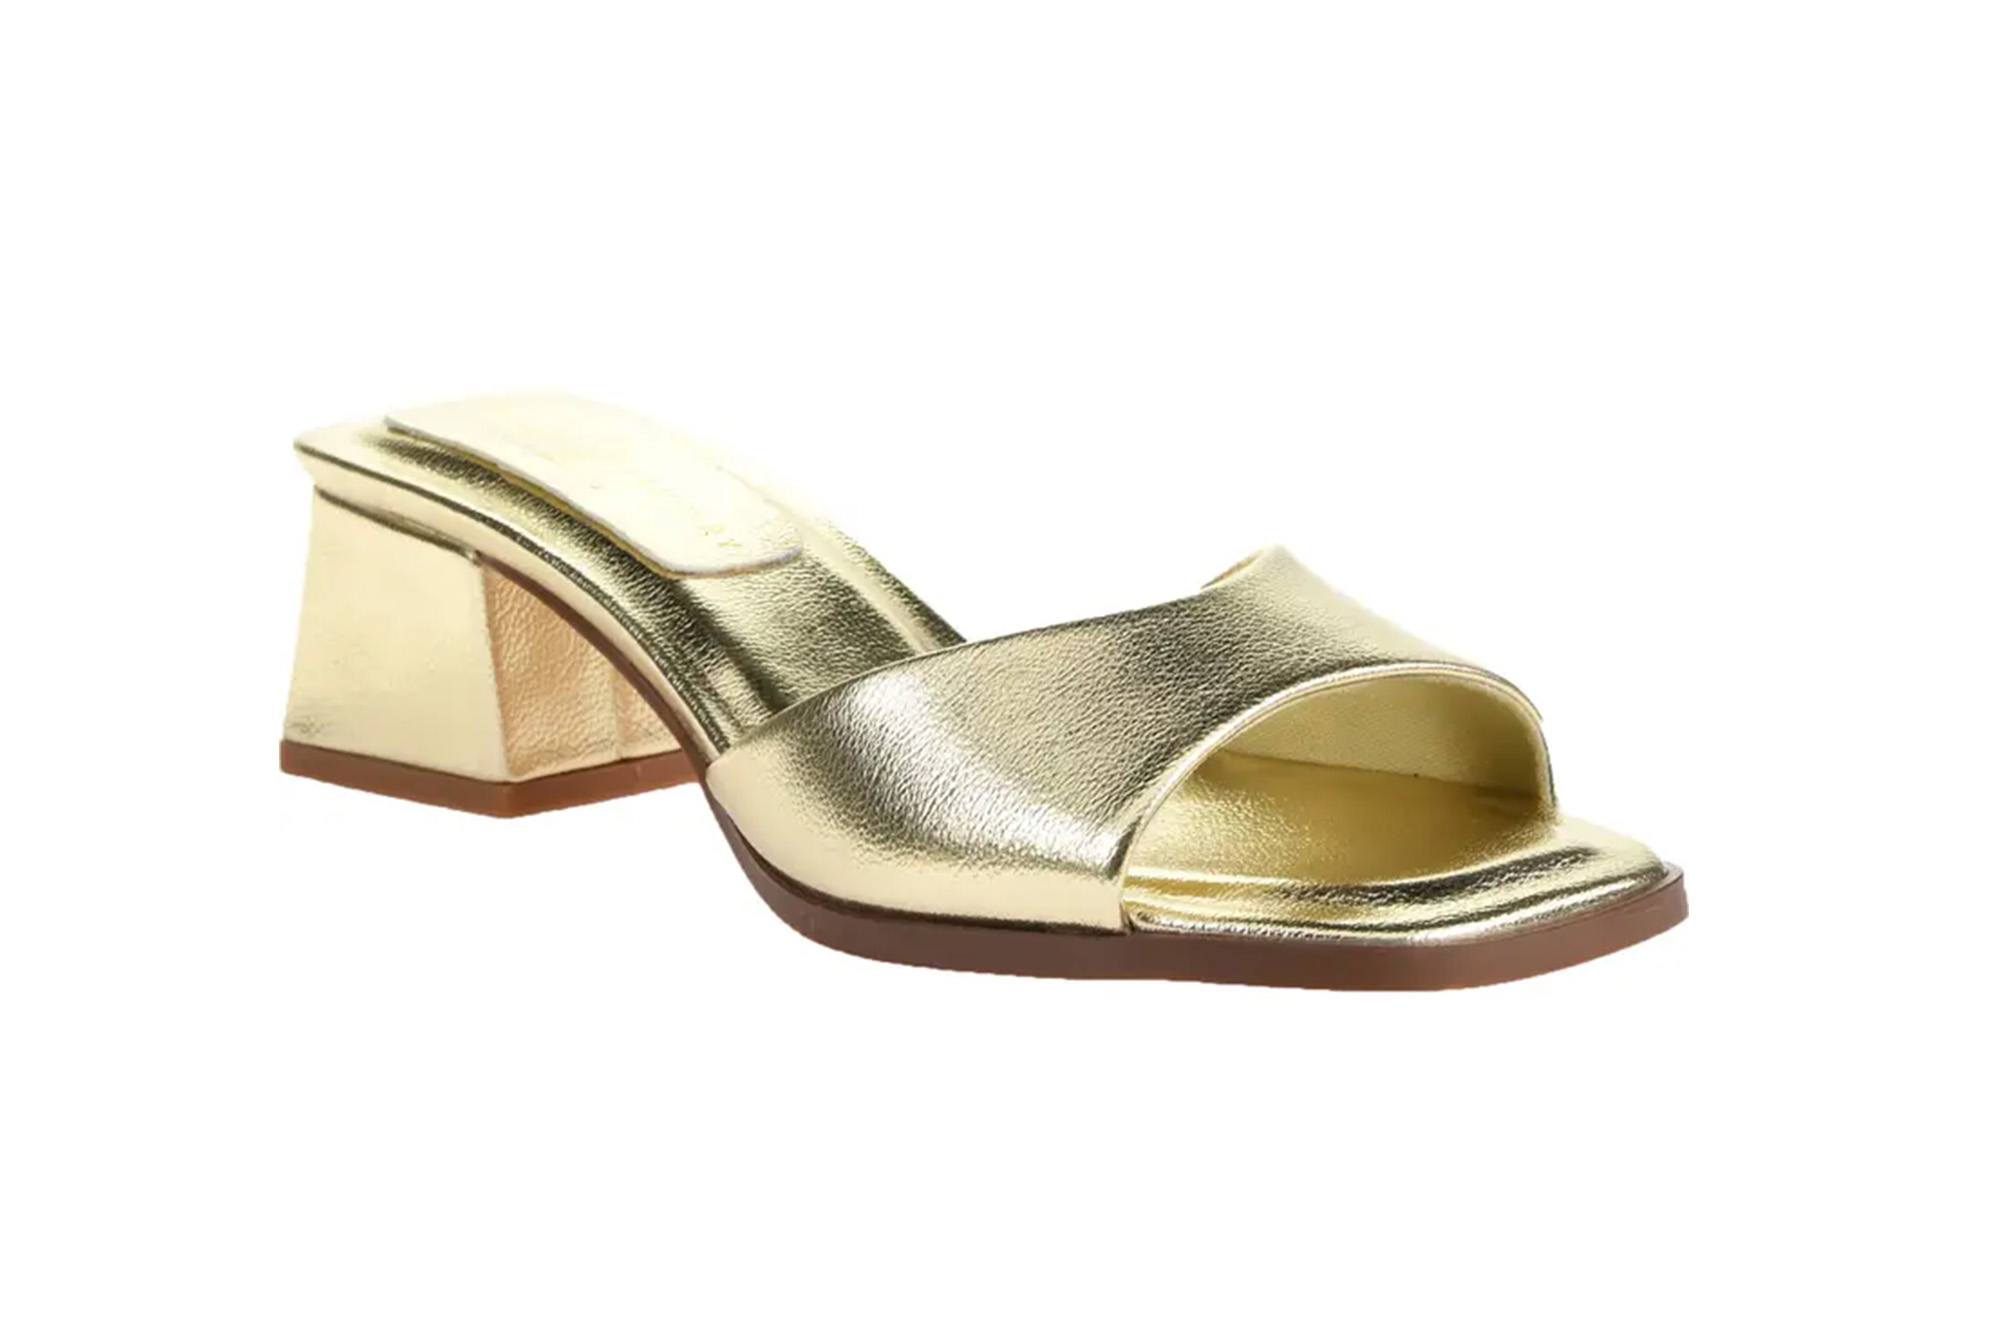 A gold sandal